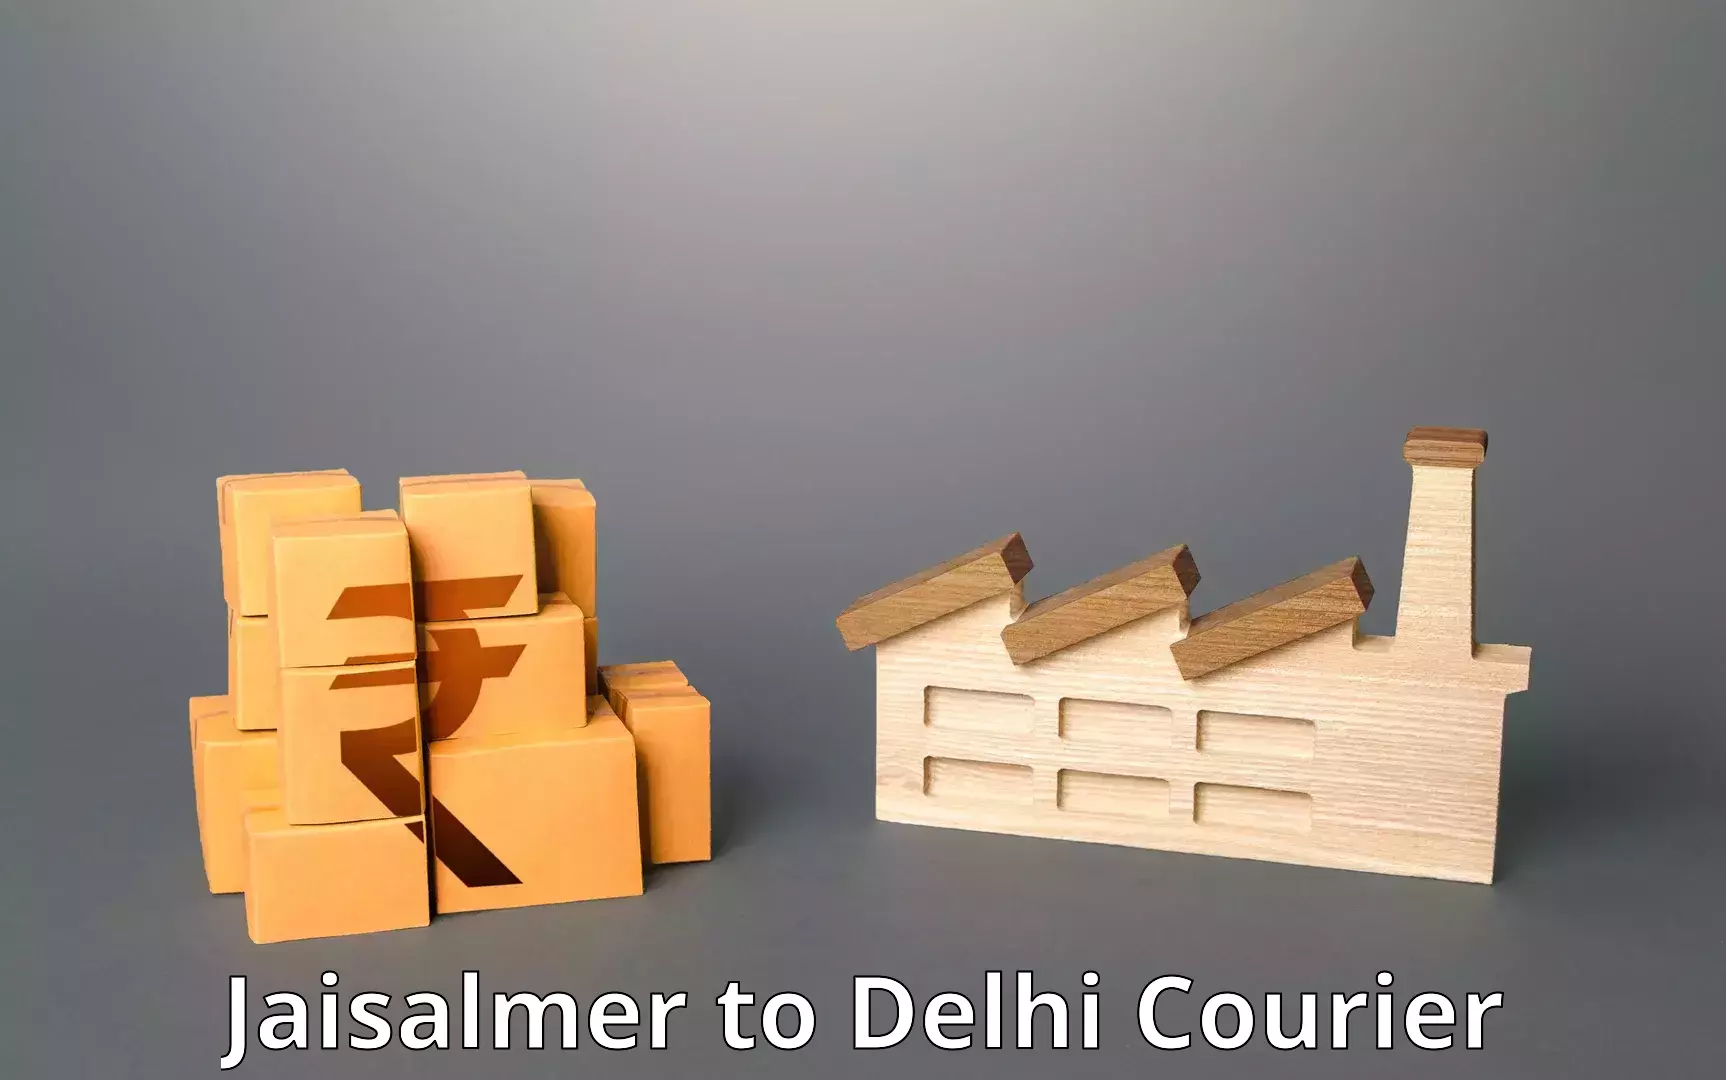 State-of-the-art courier technology Jaisalmer to University of Delhi